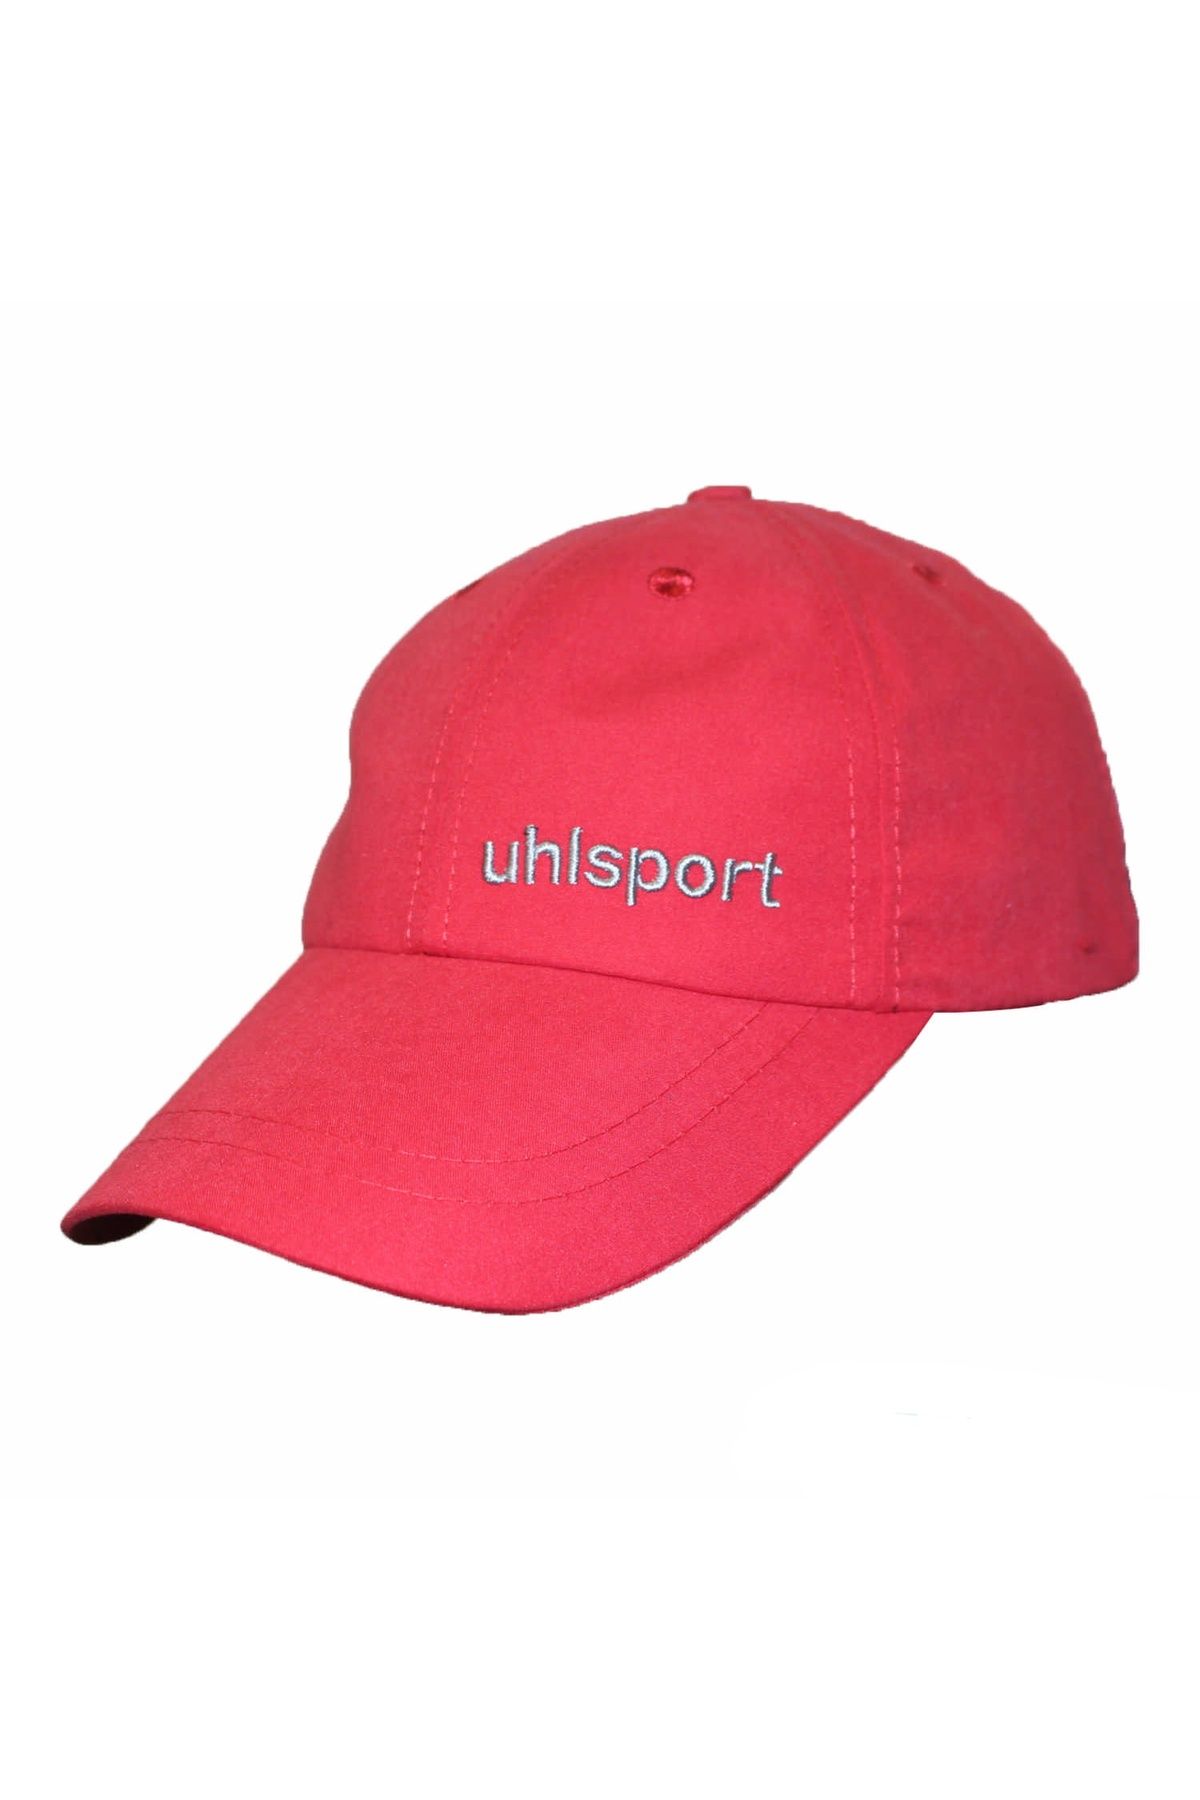 uhlsport 8201010/68 Mıcro Leo Unisex Şapka